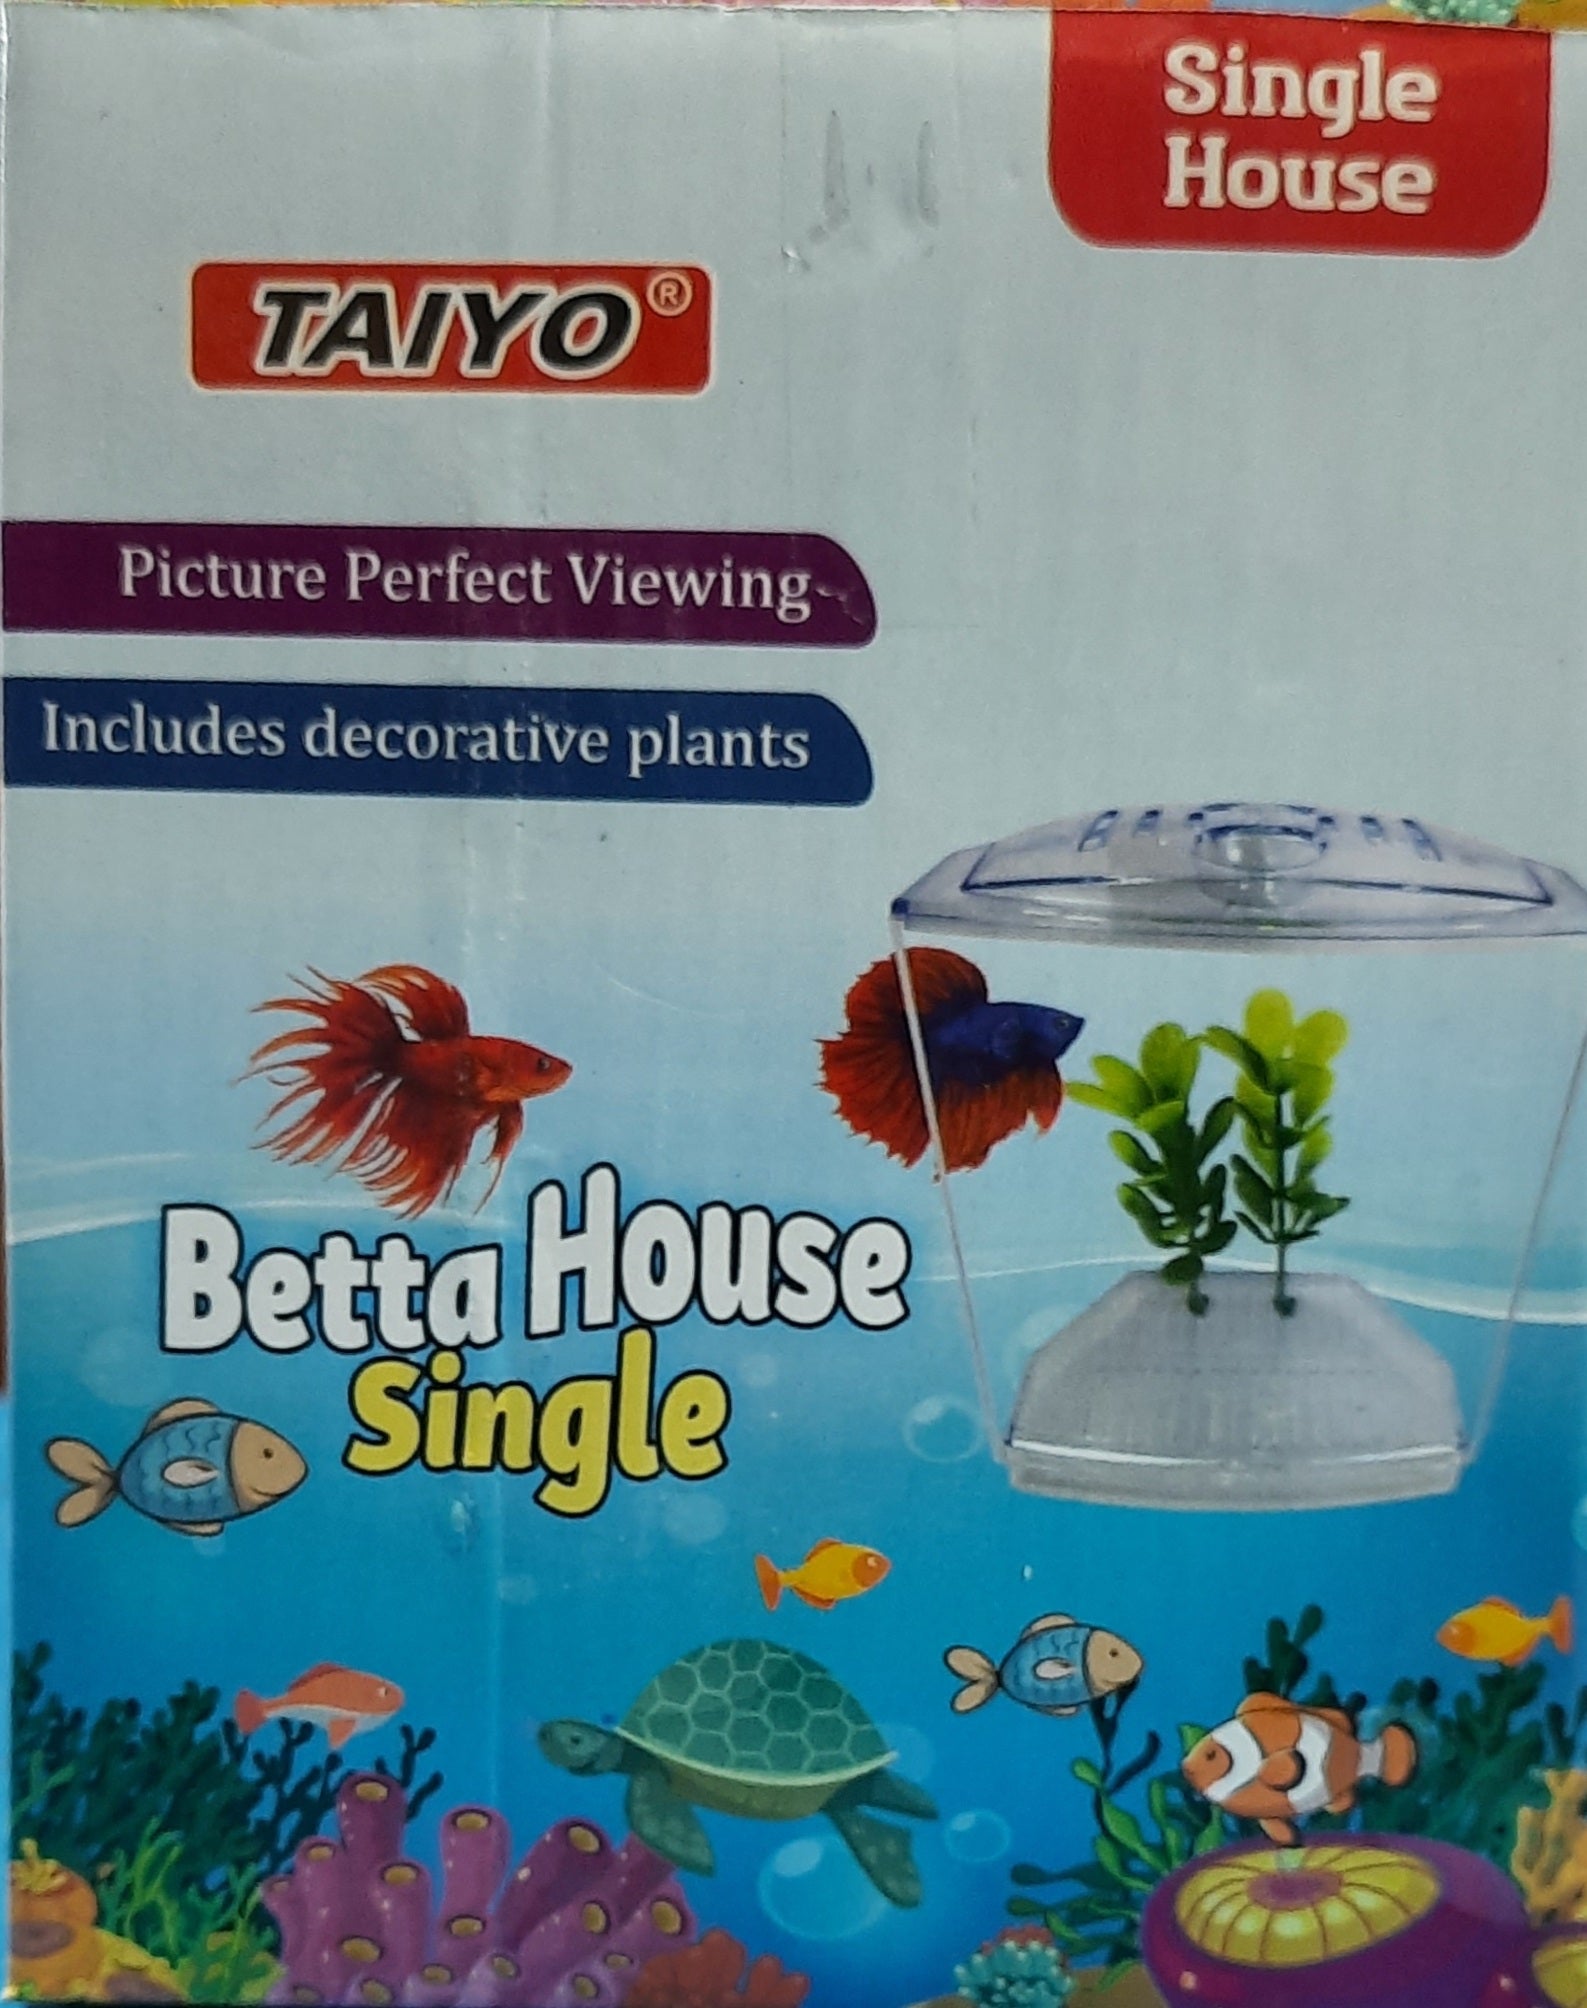 Betta House Single - Stylish Premium Betta Tank from Taiyo